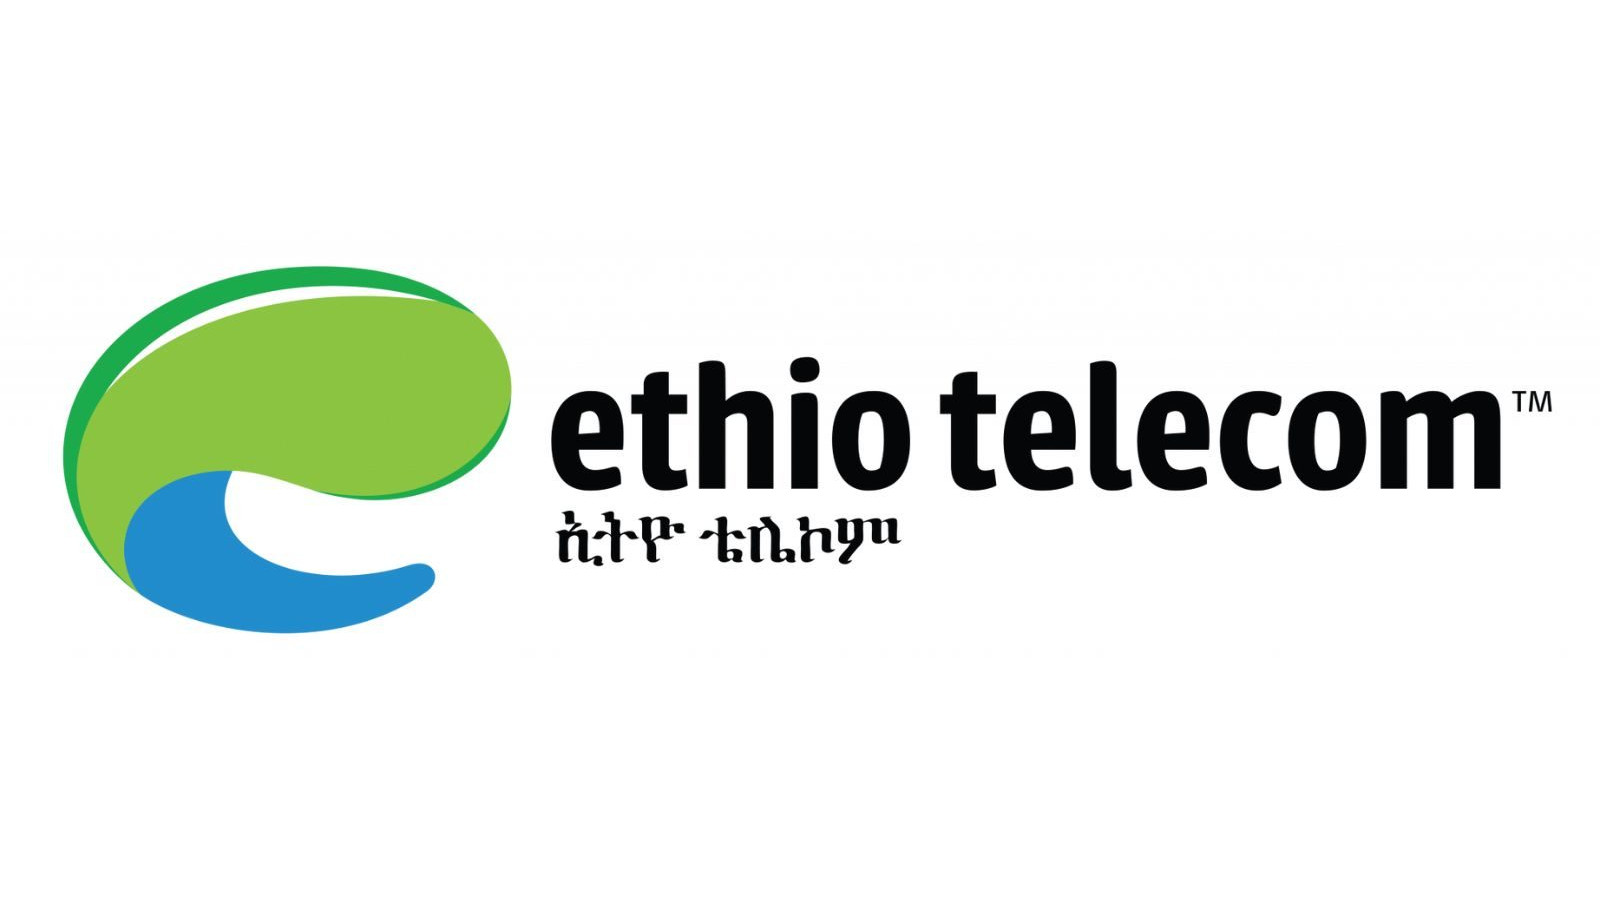 Ethiotelecom 5 ETB Mobile Top-up ET [$ 0.68]